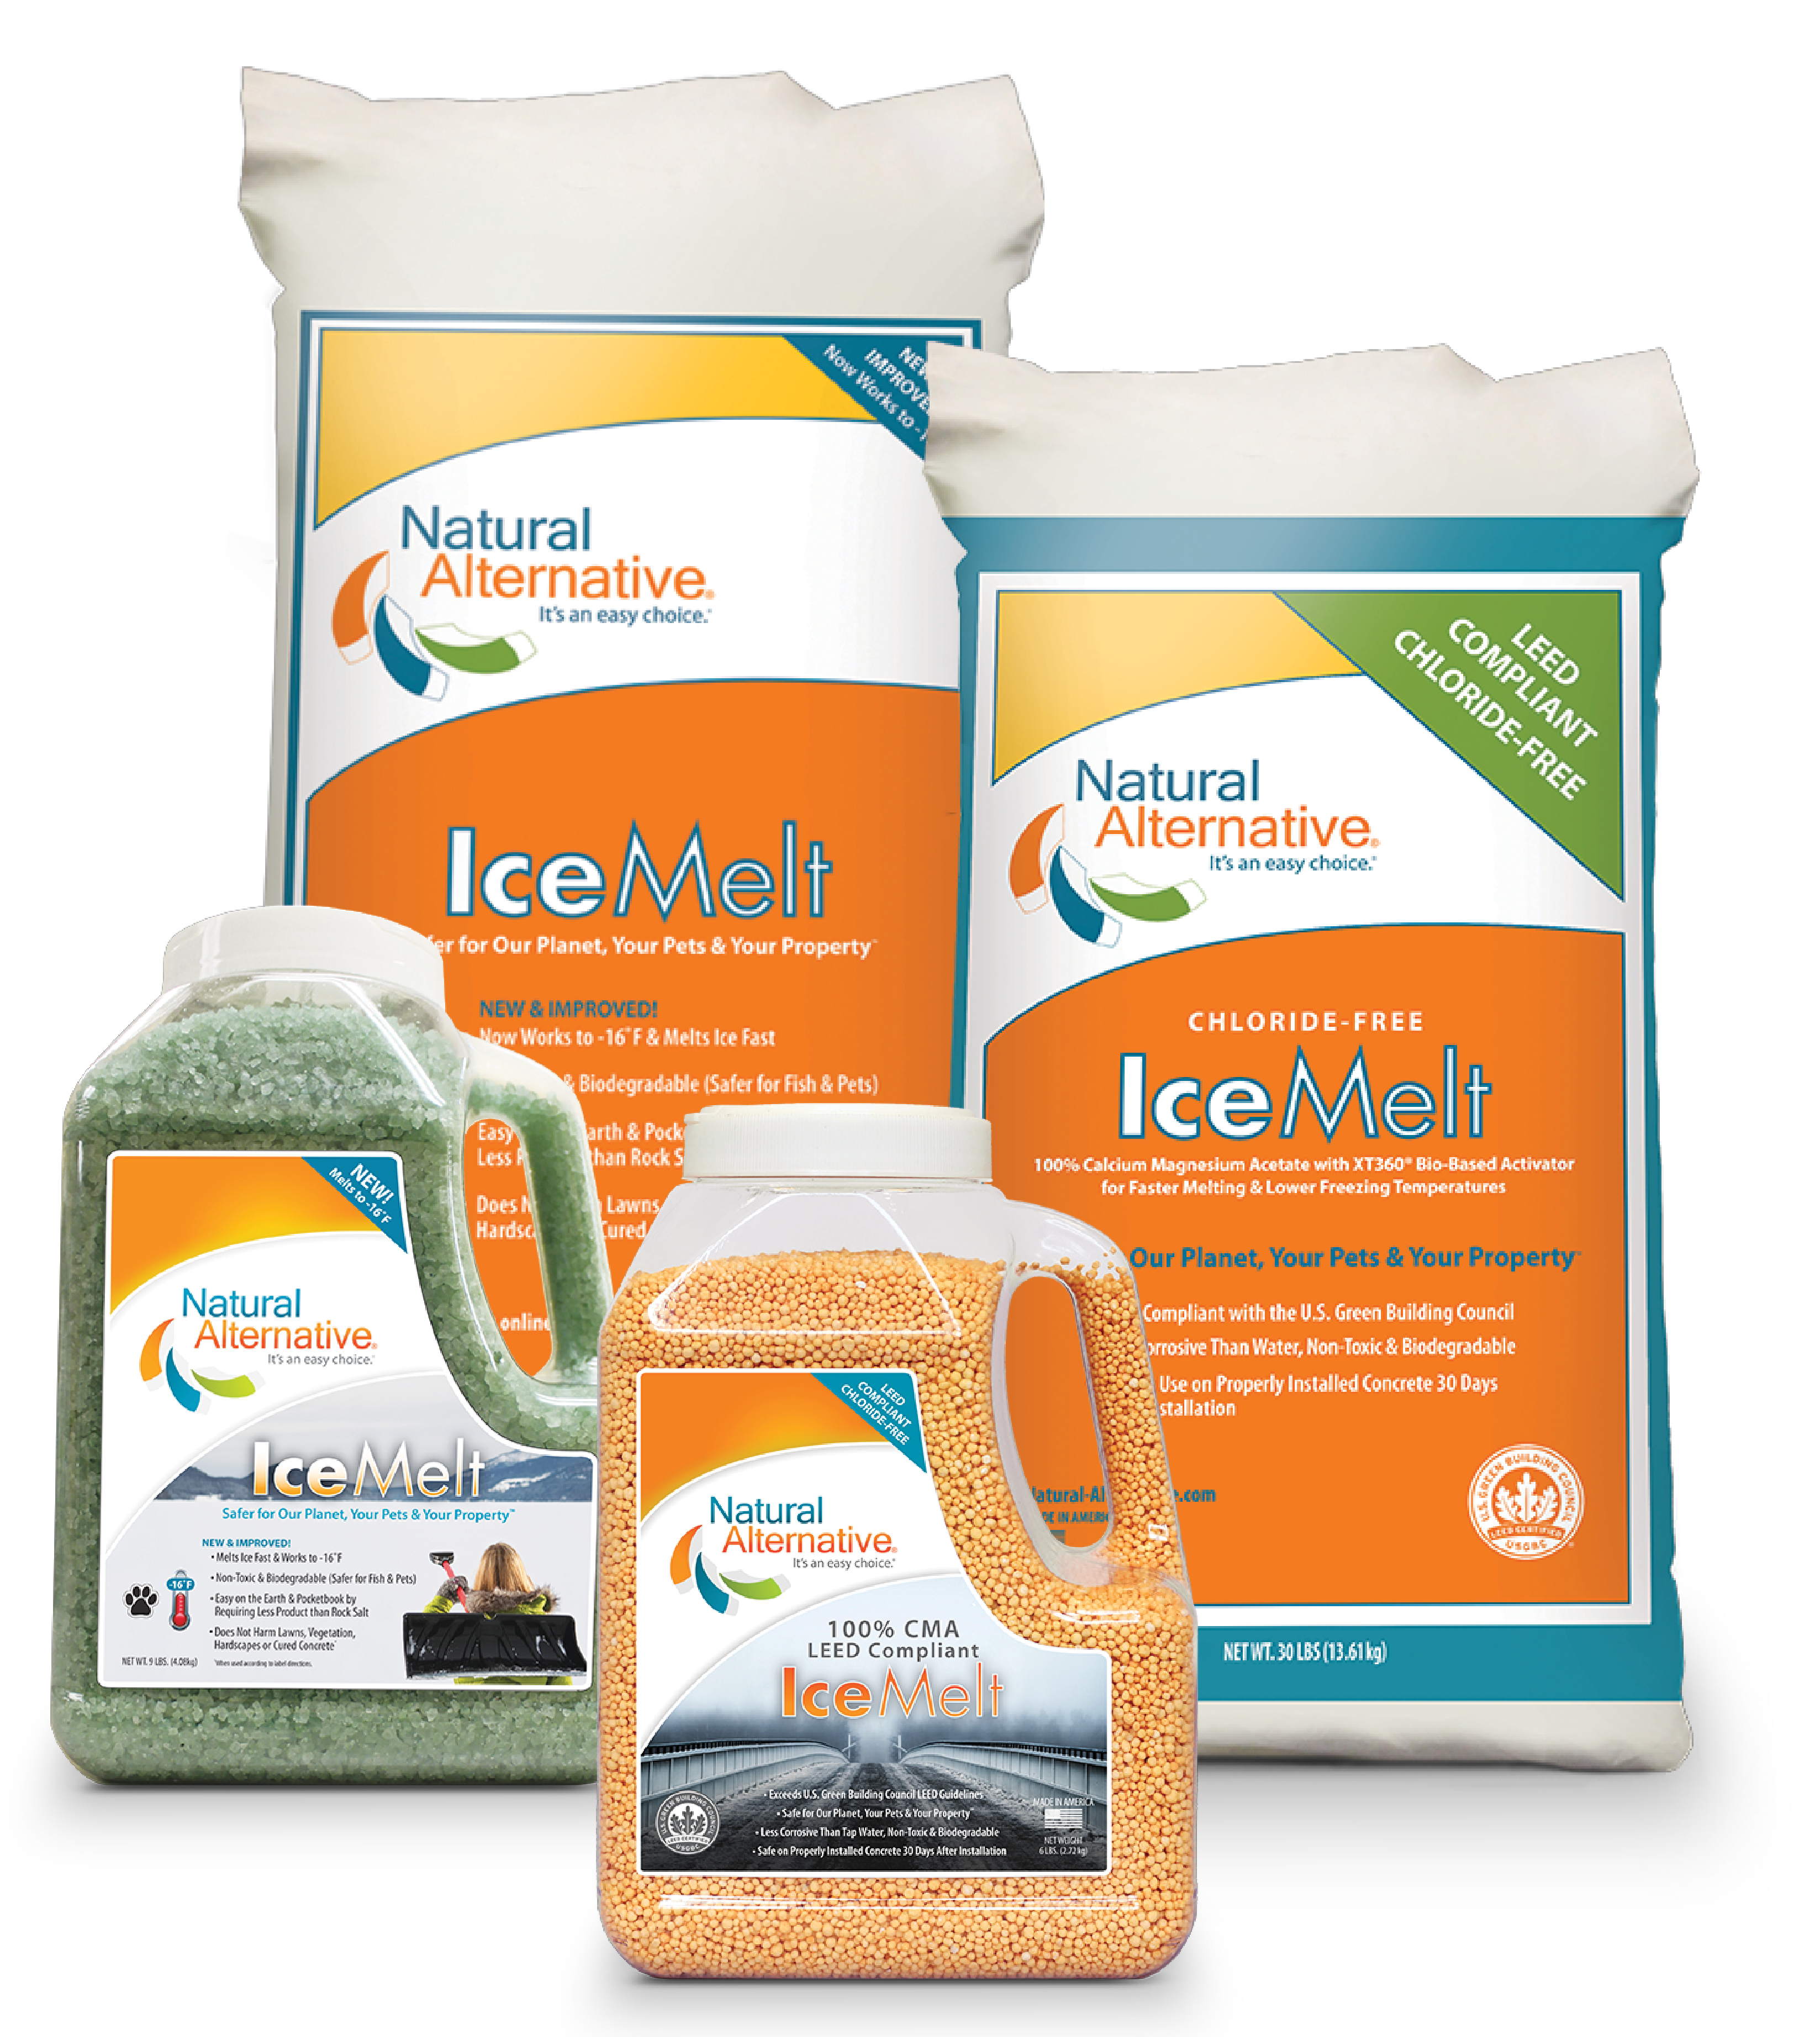 Natural Alternative Ice Melt